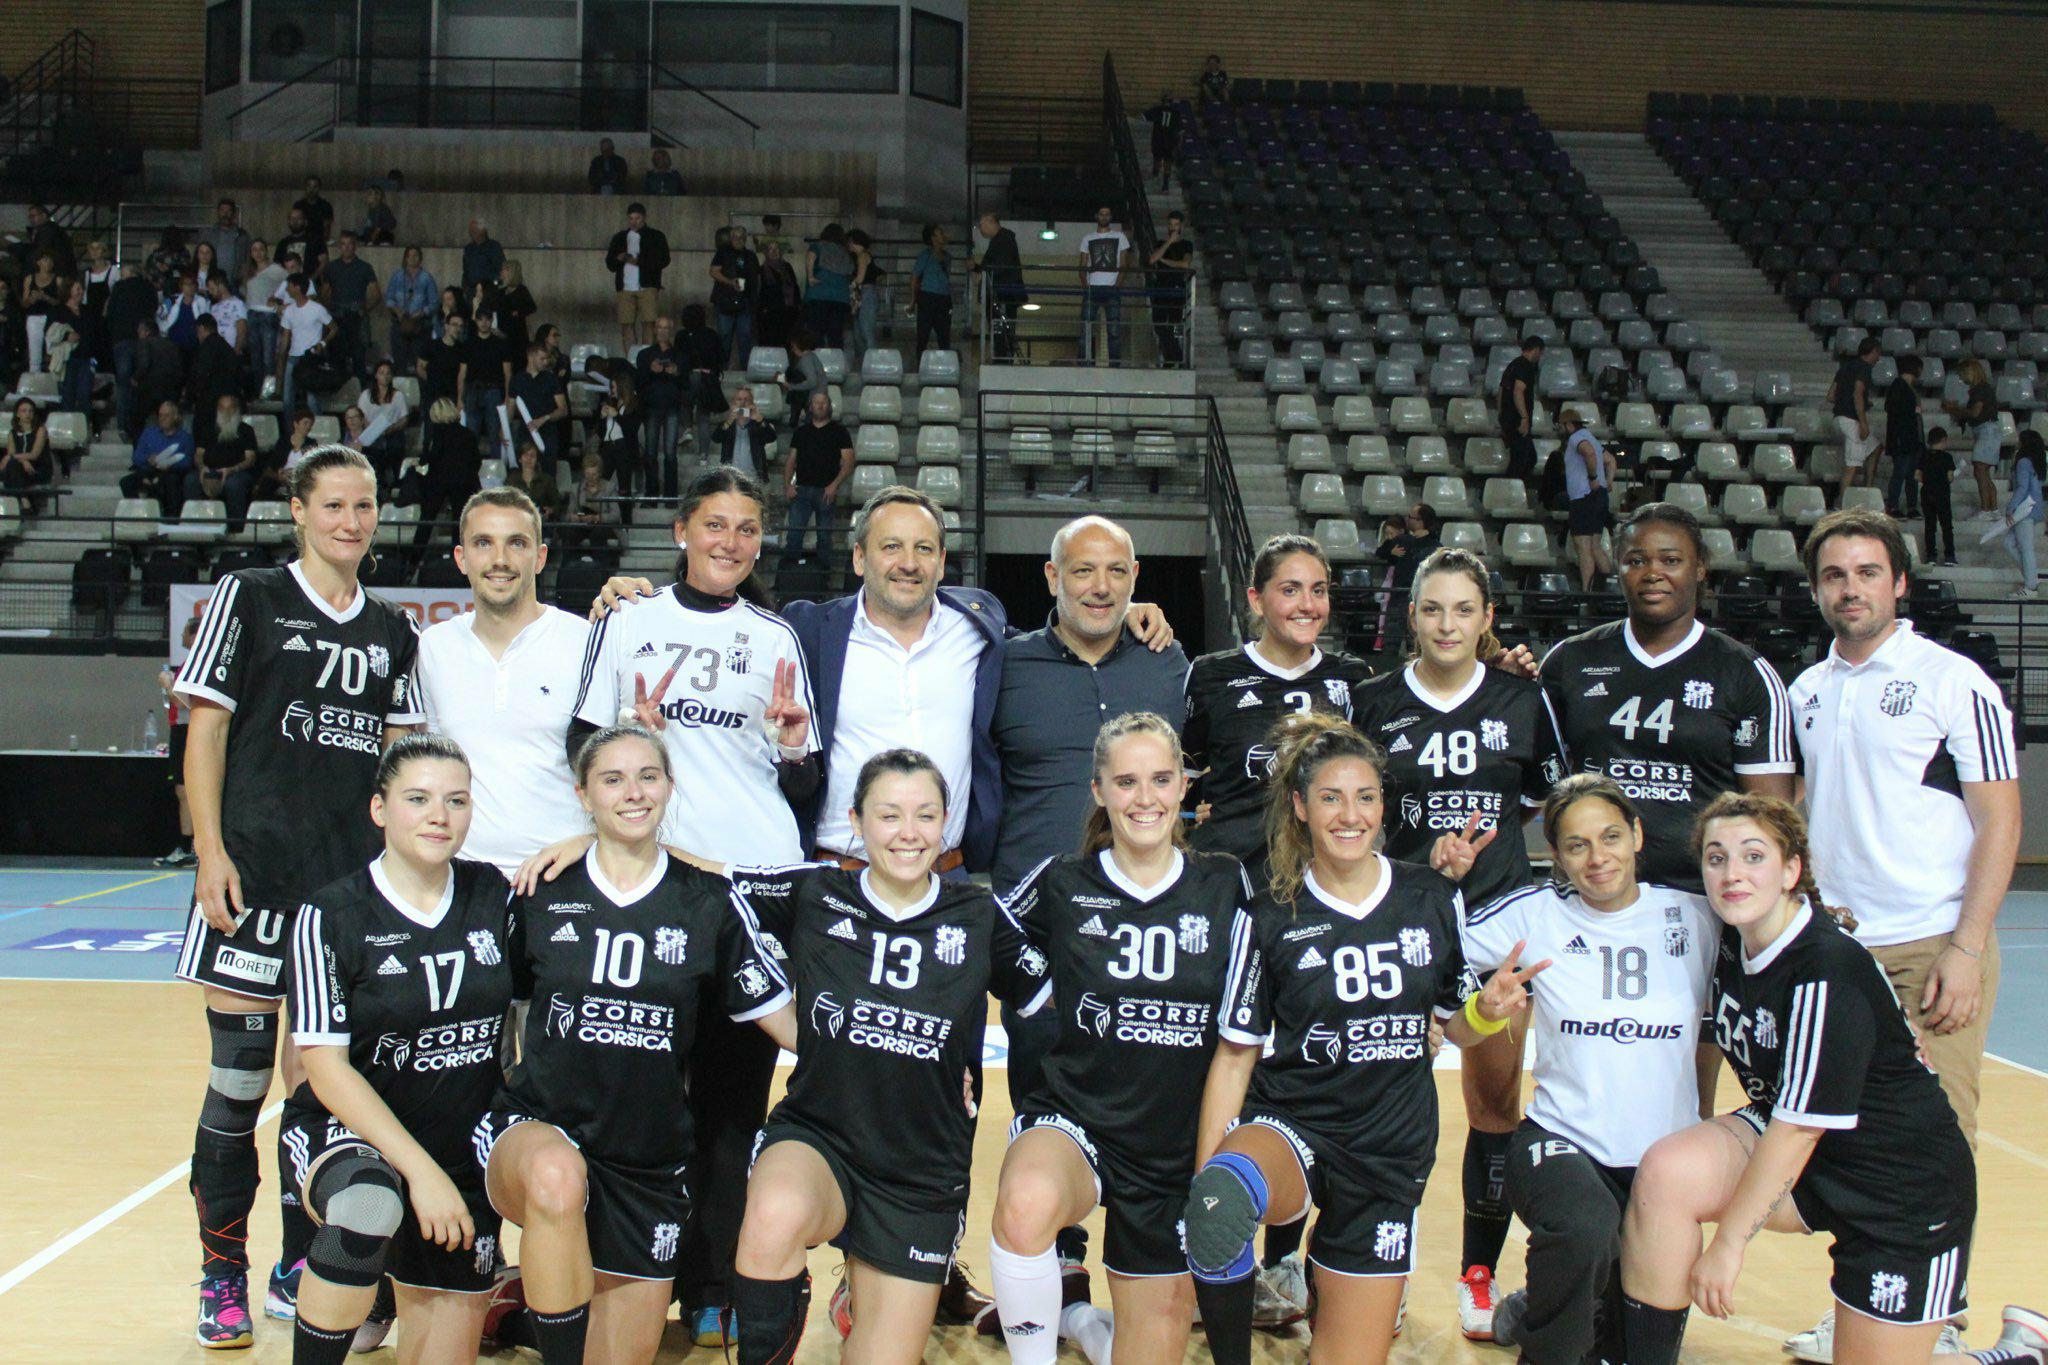 Handball Ajaccio Club : Une belle fête au Palatinu face à La Crau (37-21)